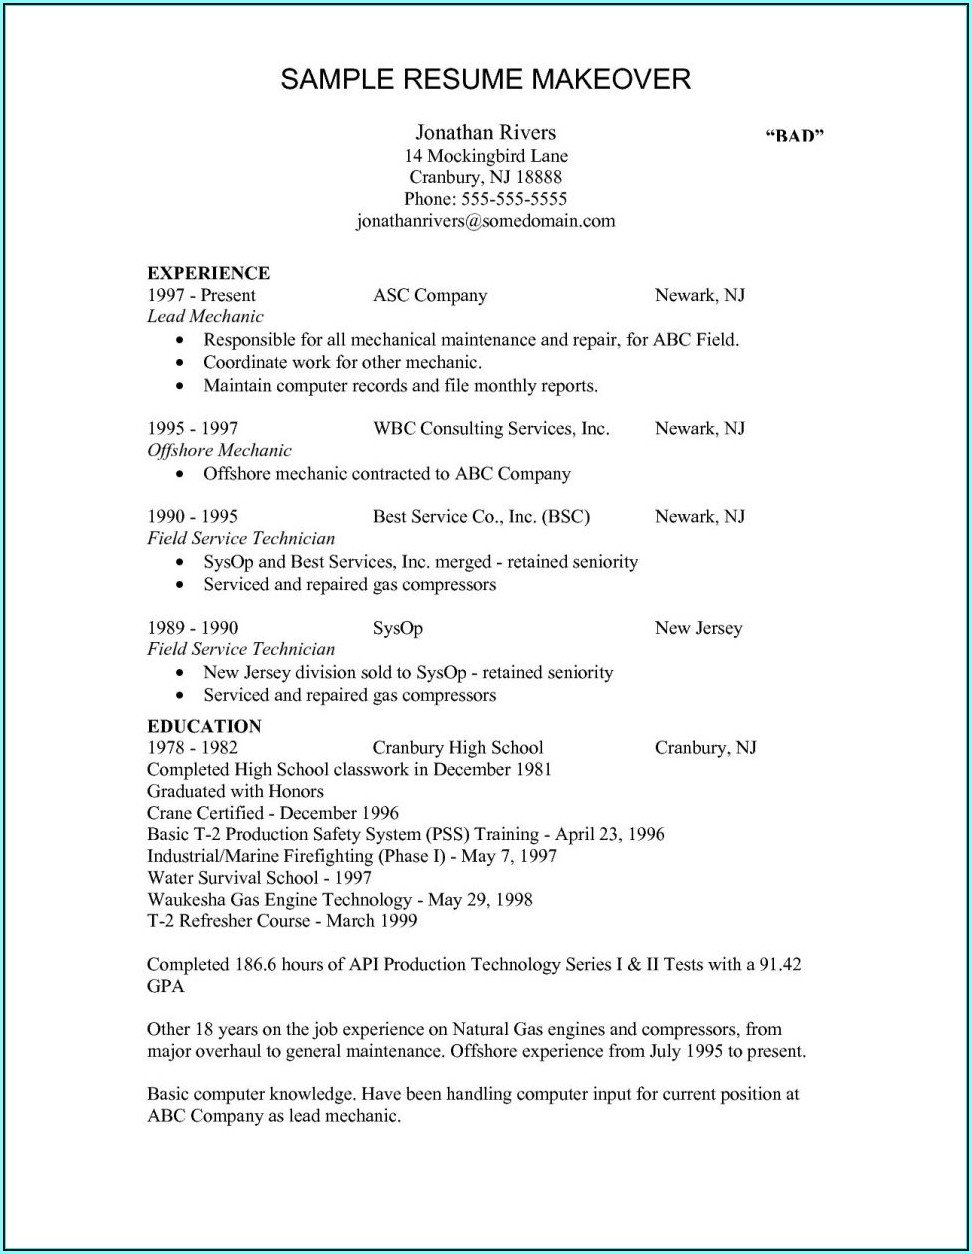 resume-oilfield-resume-templates